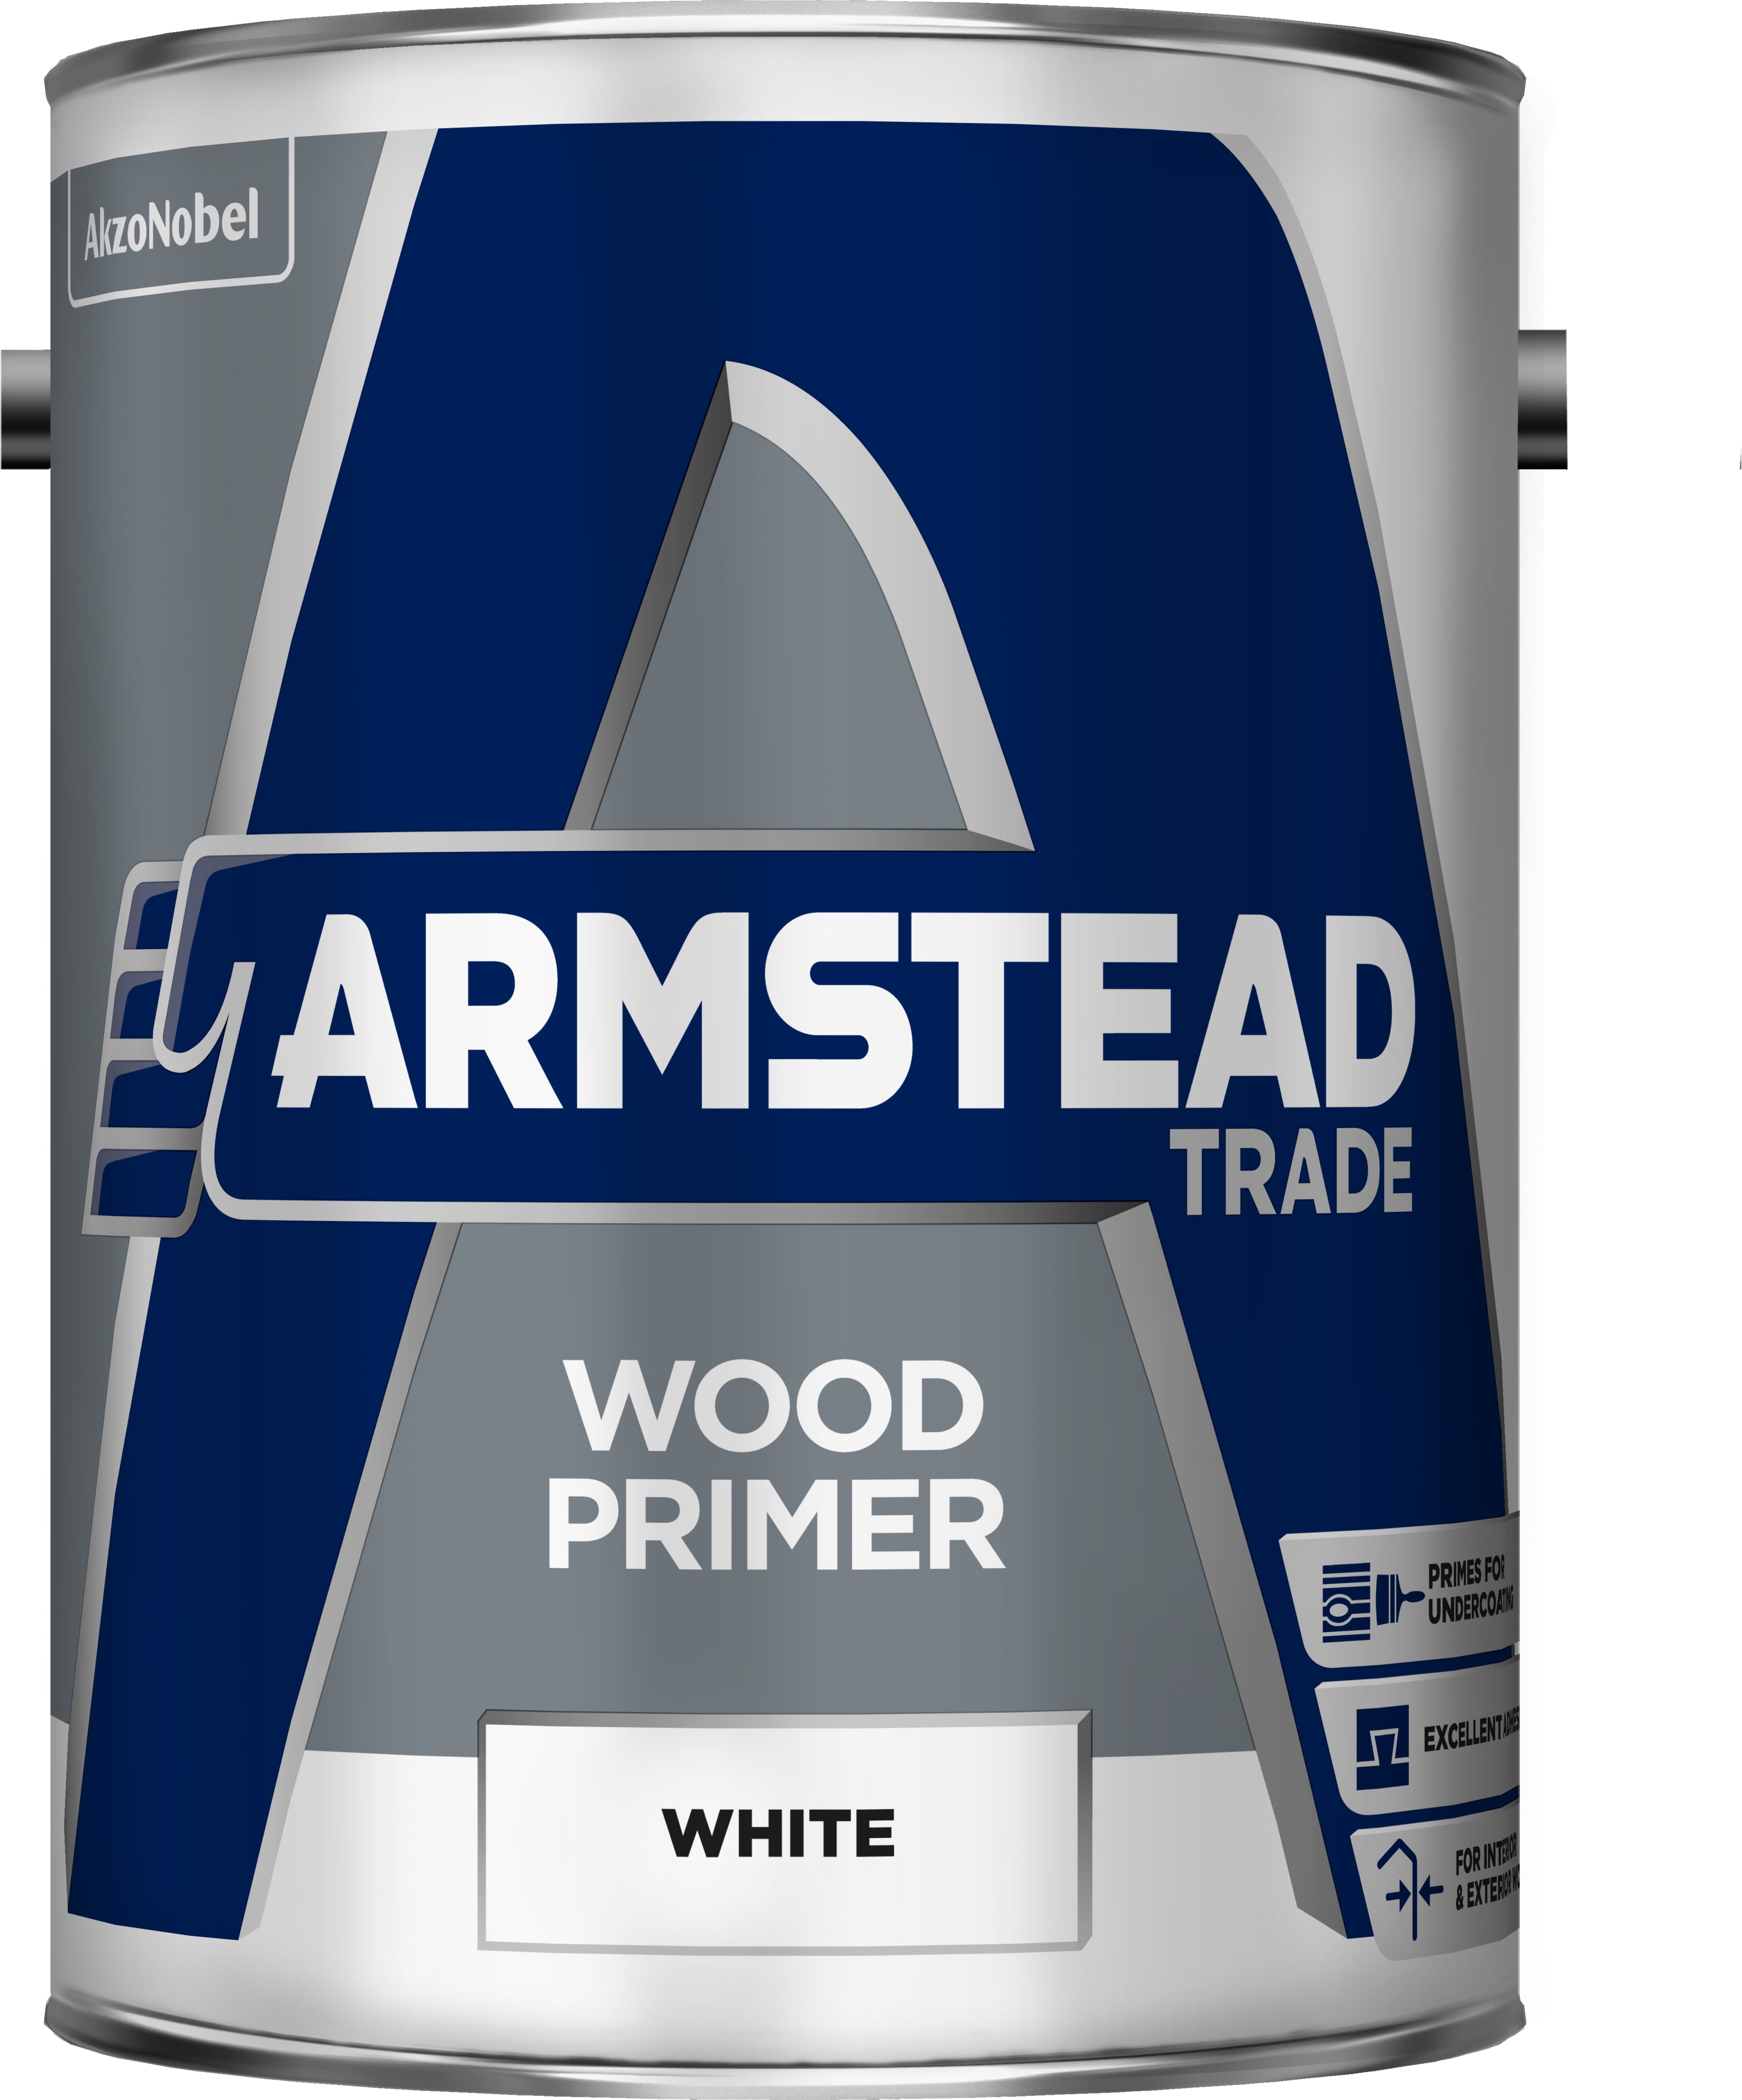 Armstead Trade Wood Primer White 5L